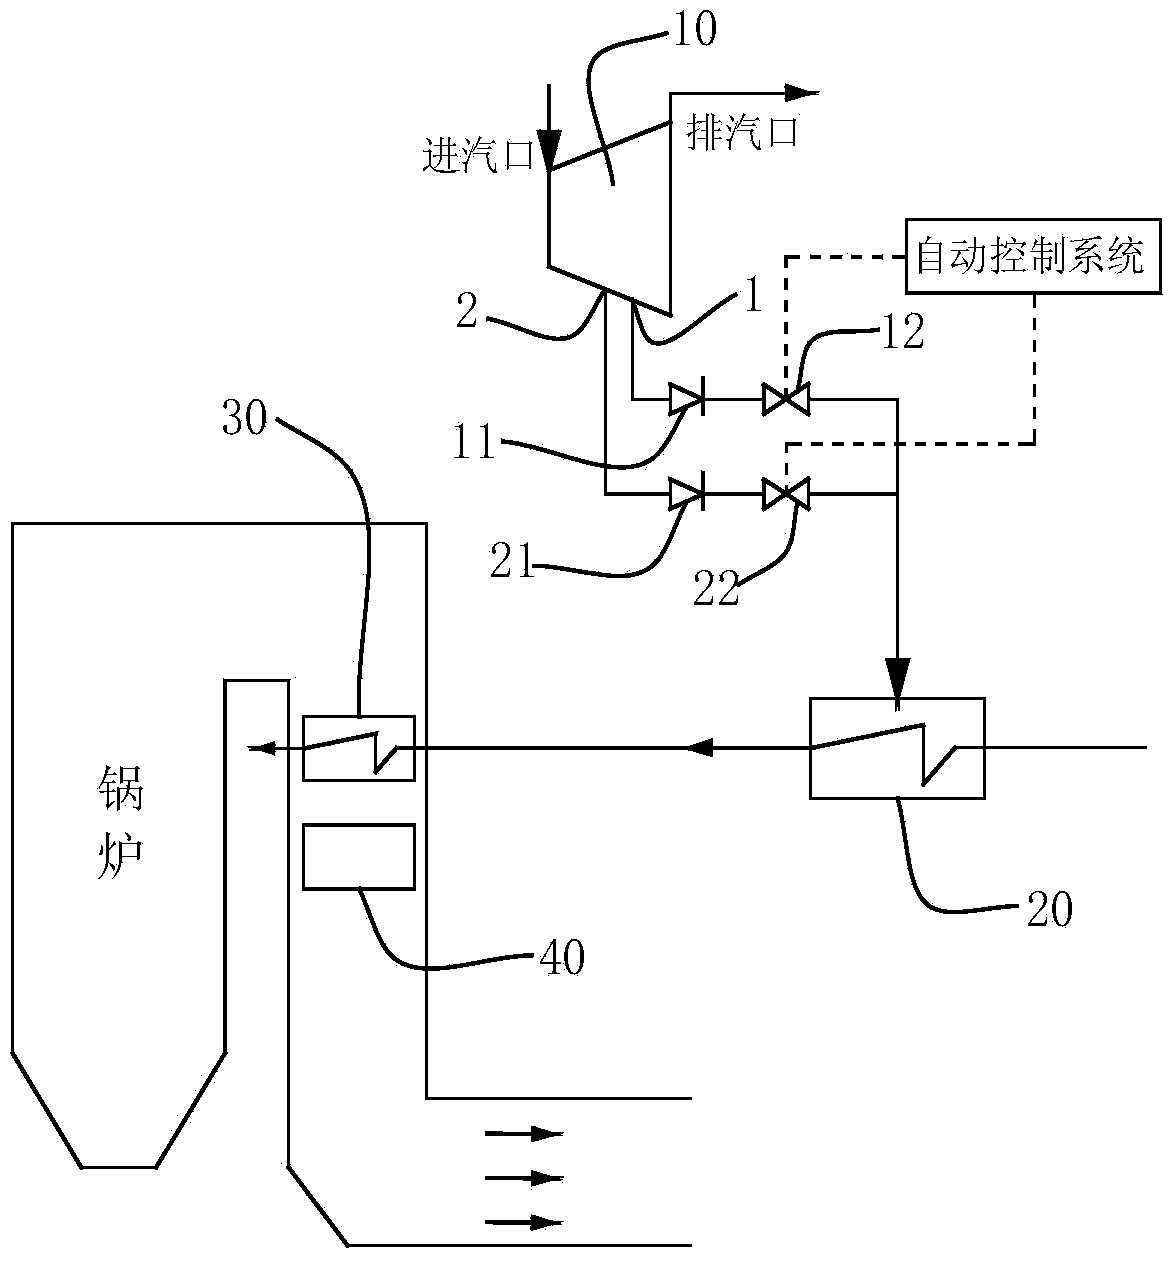 Regenerative system of turbogenerator unit and operation method thereof